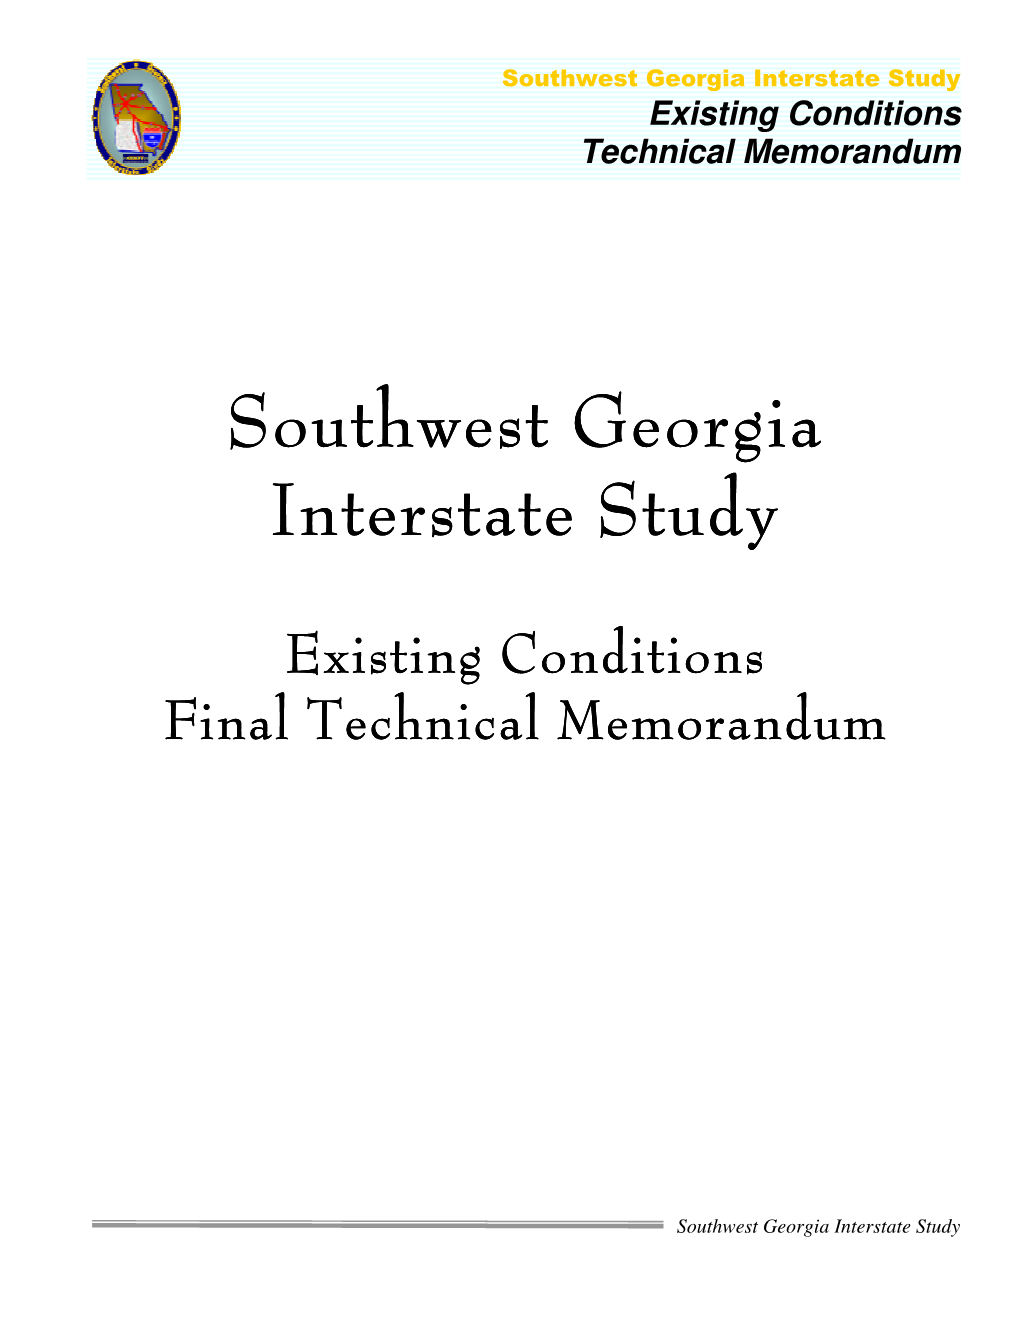 Southwest Georgia Interstate Study Interstate Study